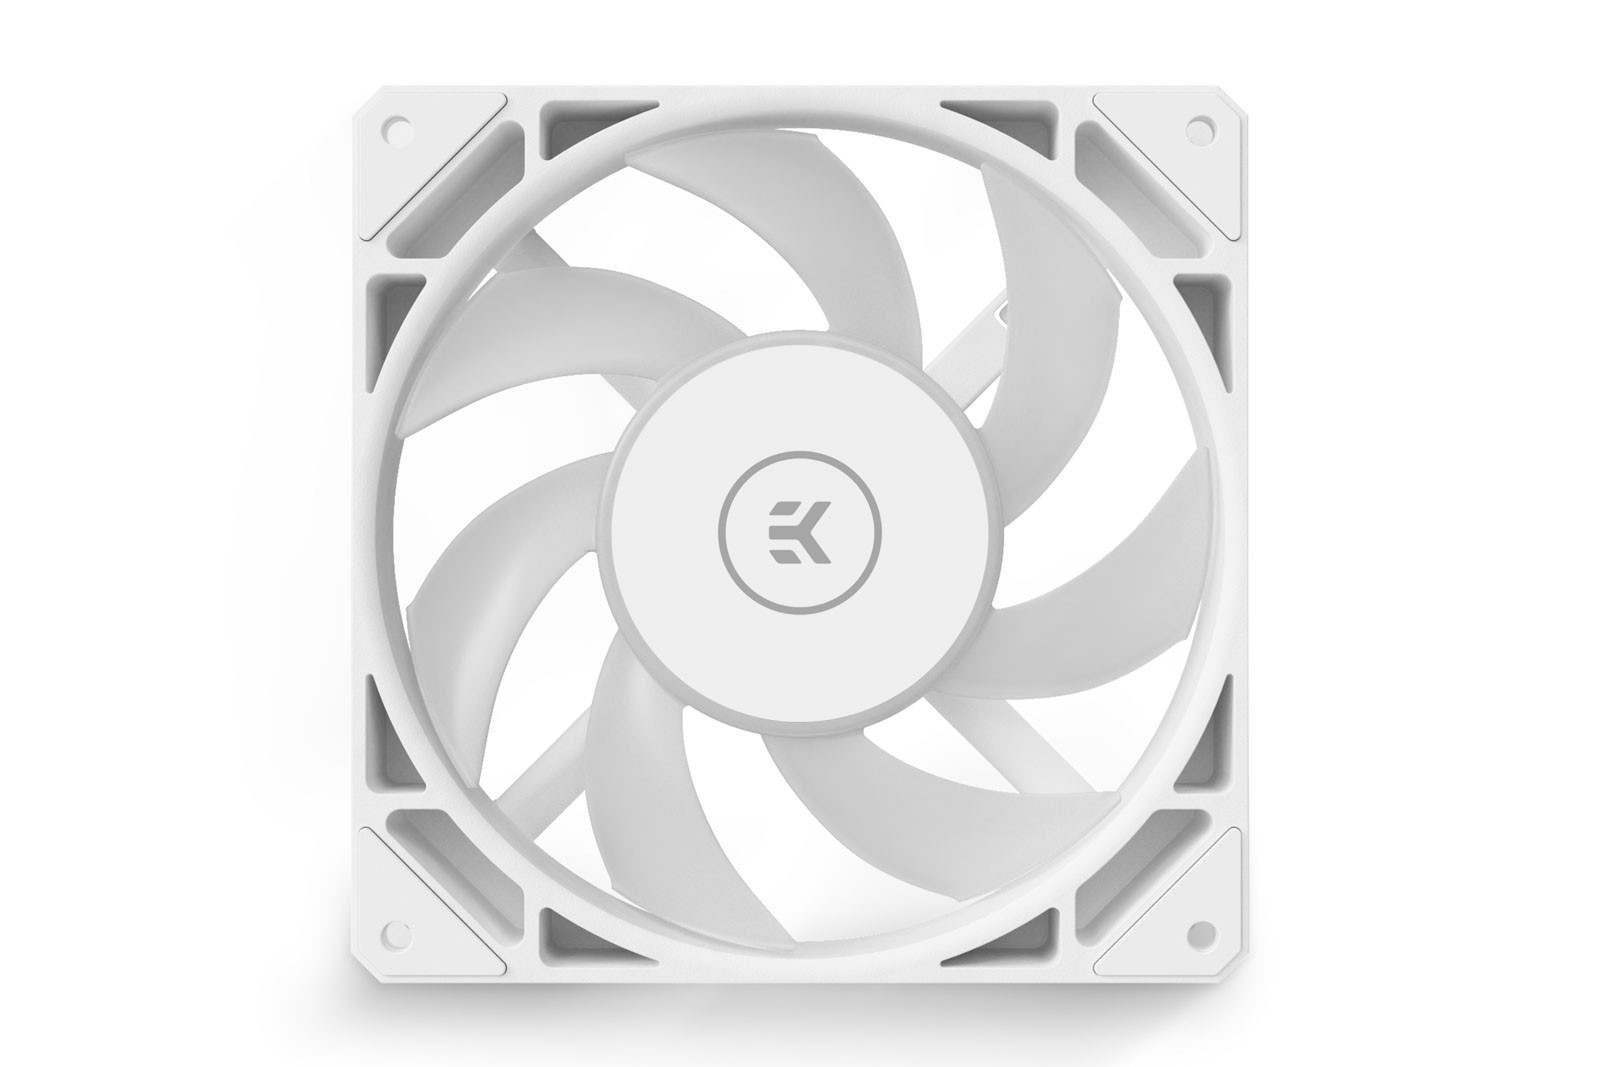 Ventoinha EKWB Loop Fan FPT 140 D-RGB (600-2200rpm) Branco